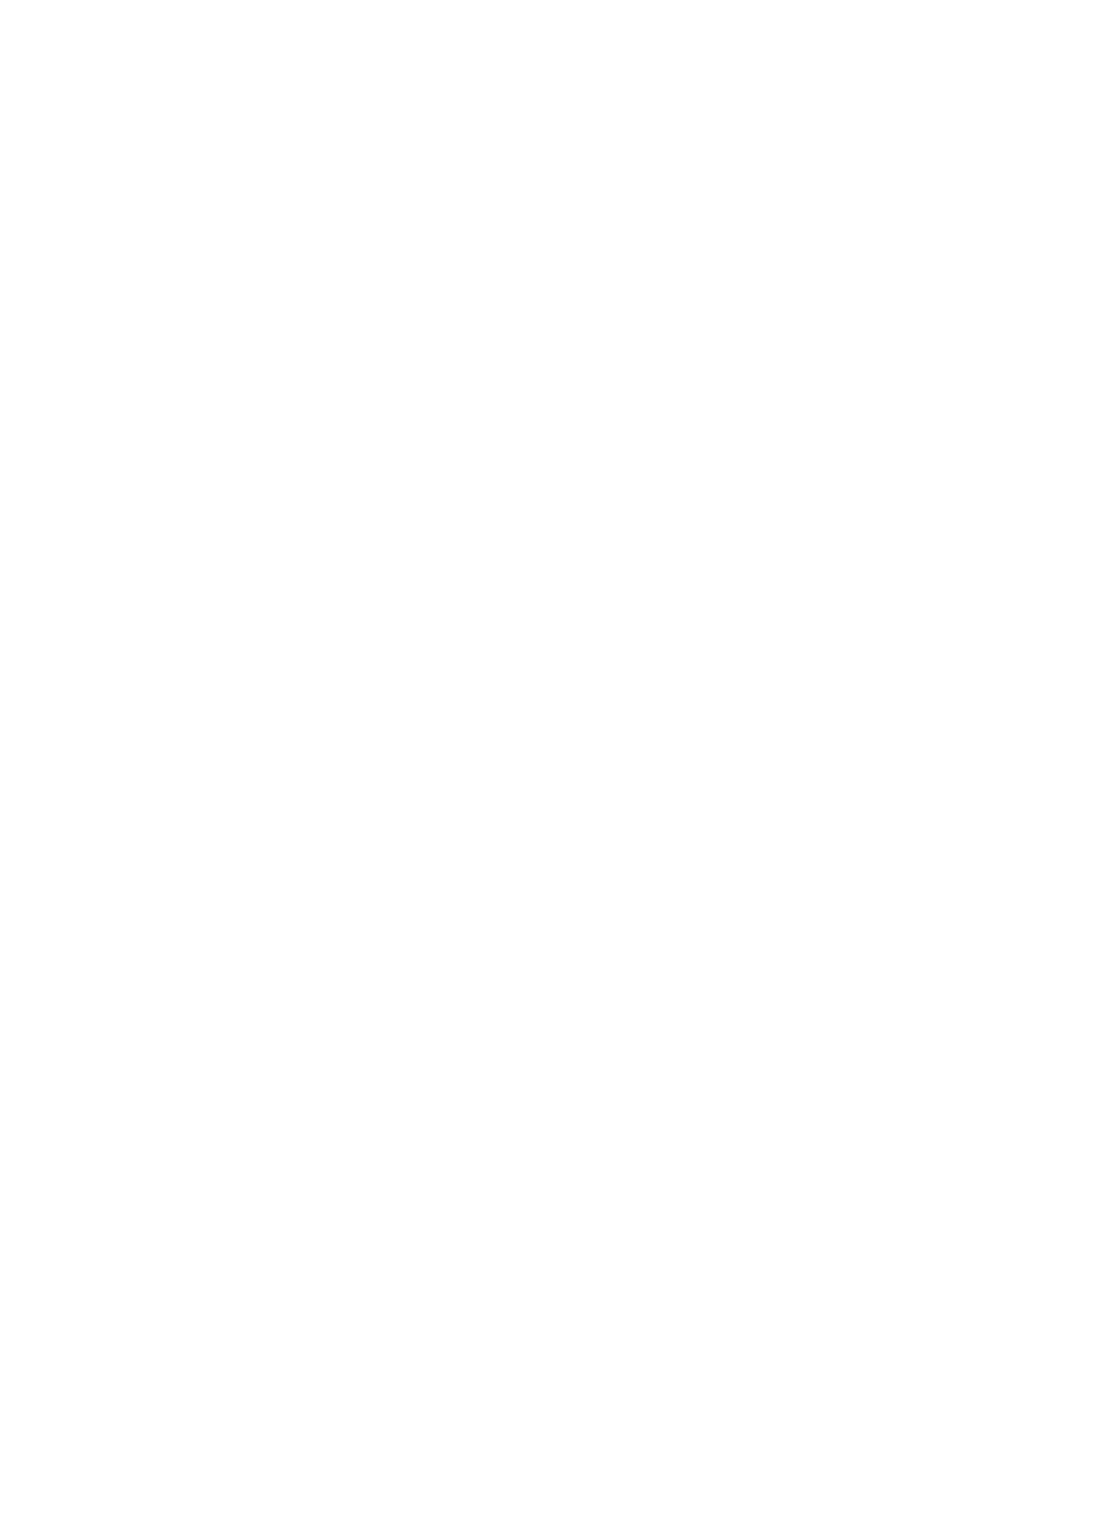 Ferrari logo pour fonds sombres (PNG transparent)